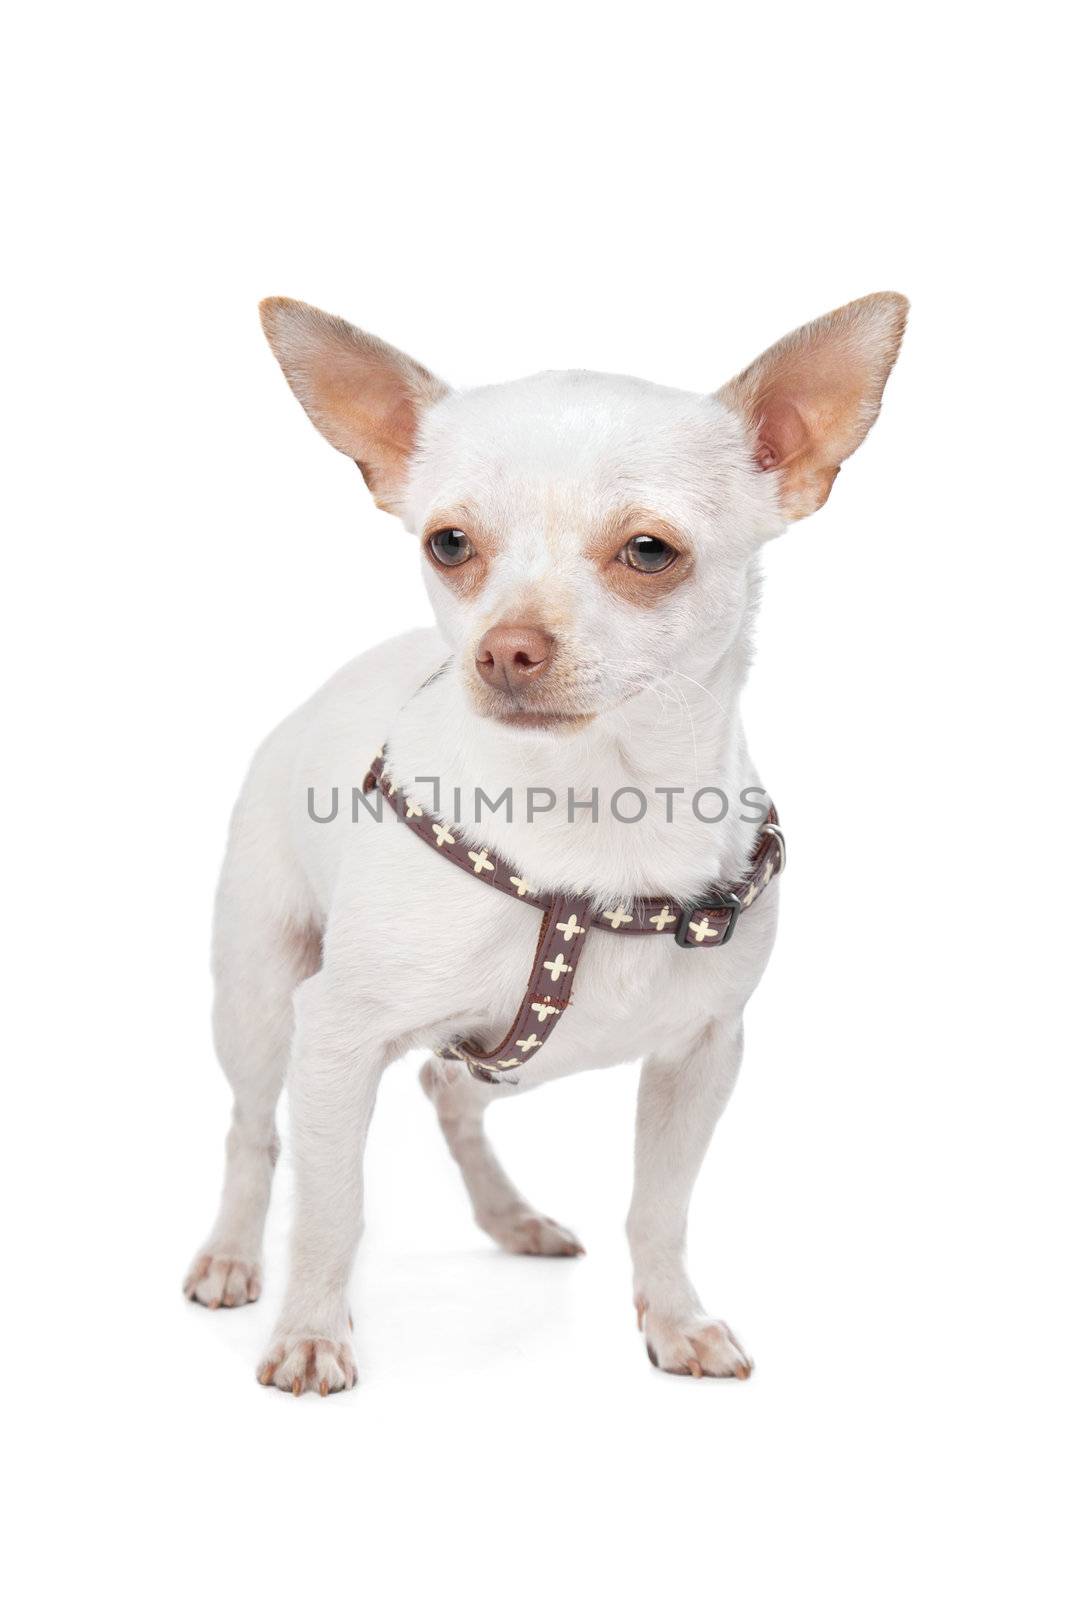 White Chihuahua by eriklam